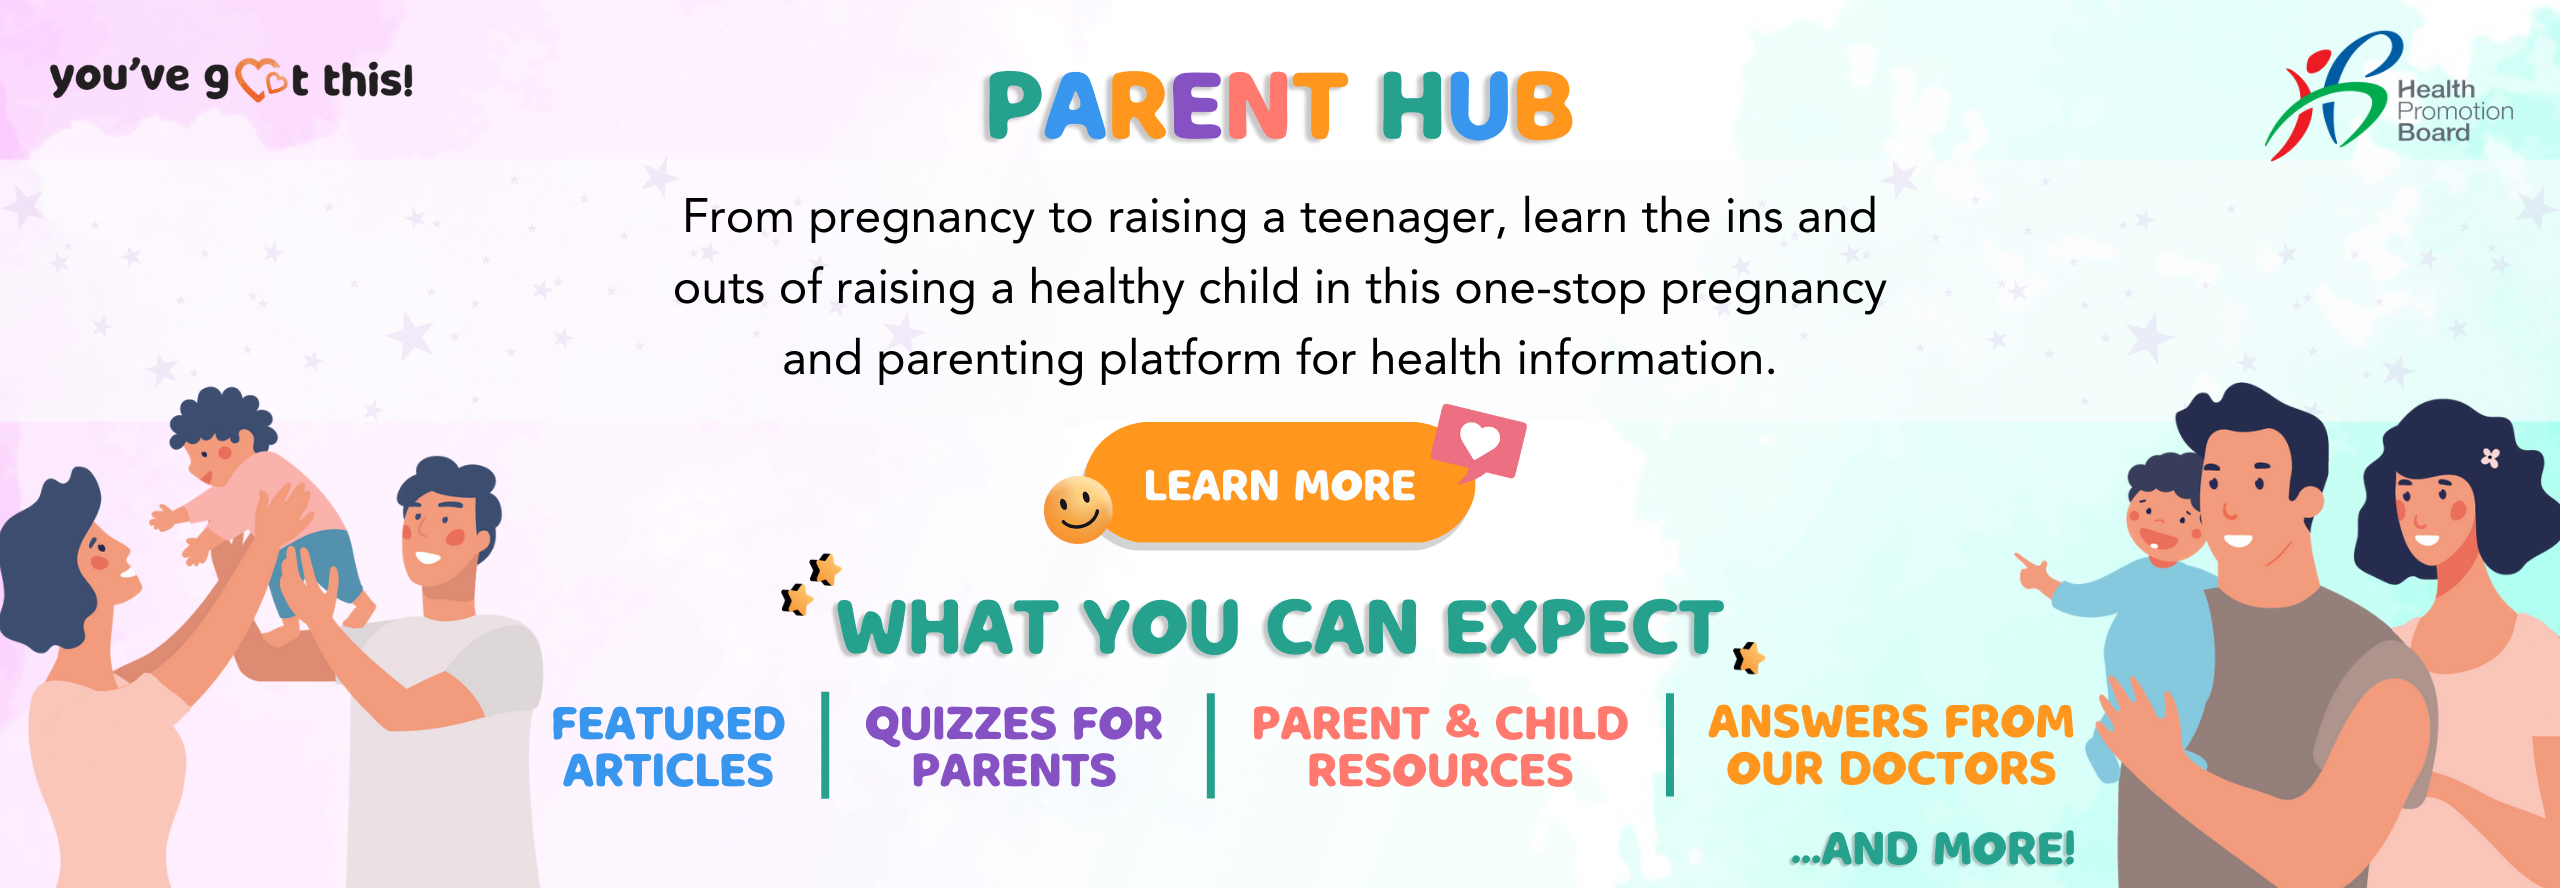 Parent Hub Web Banner 